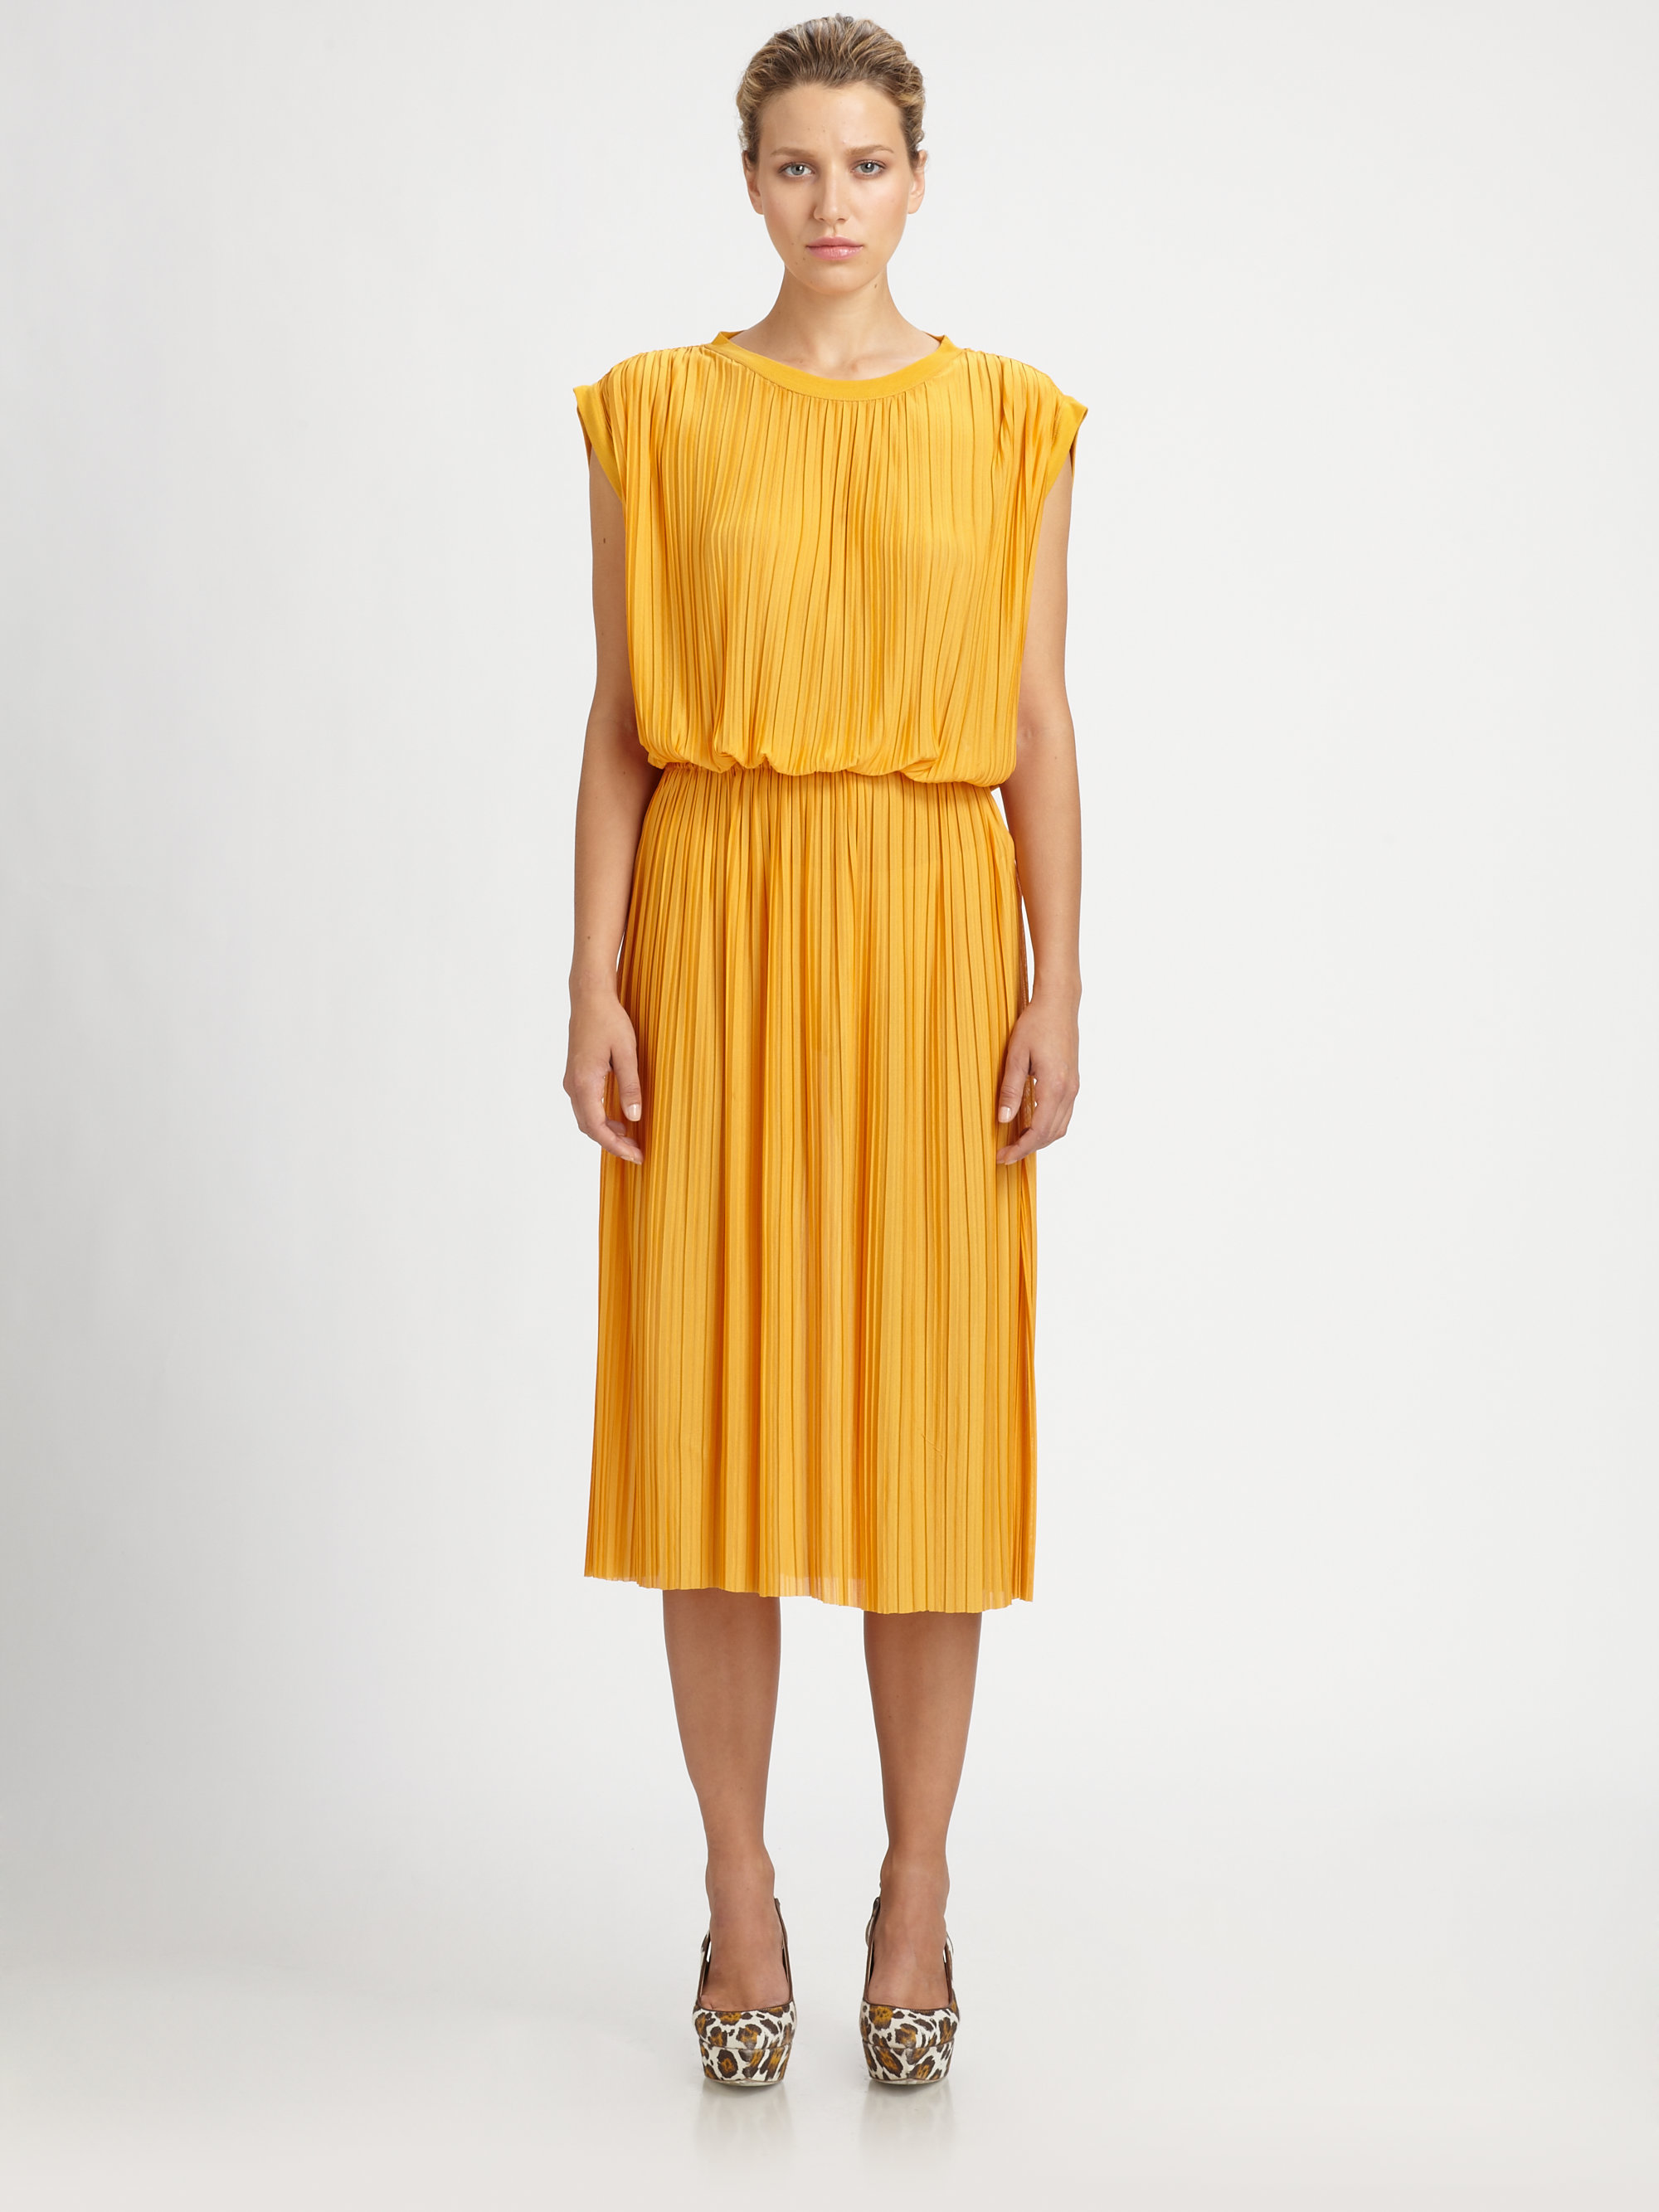 Stella Mccartney Pleated Dress in Yellow | Lyst